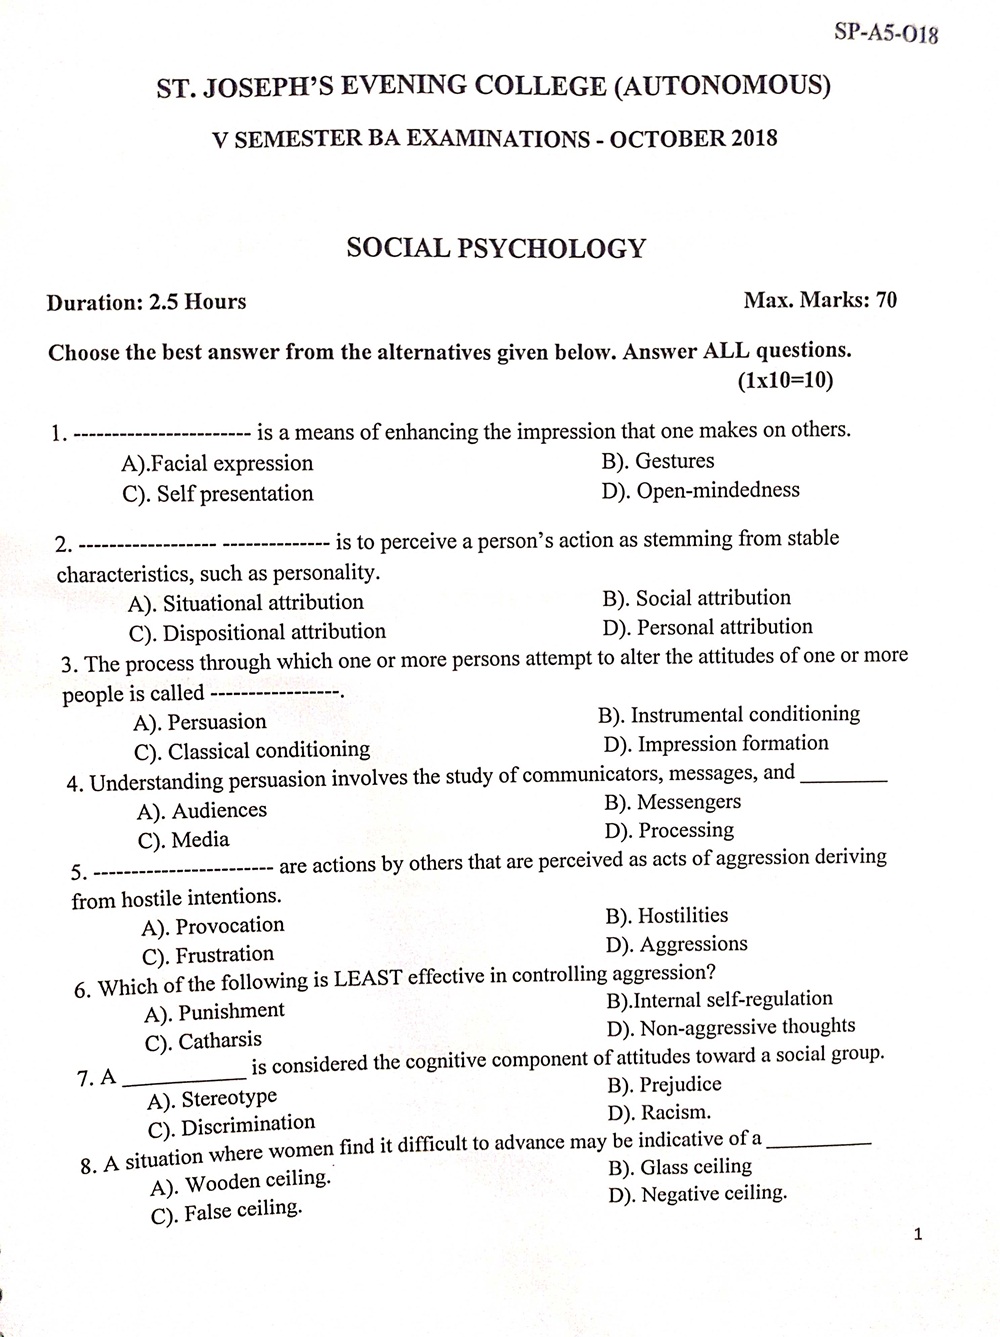 social psychology paper